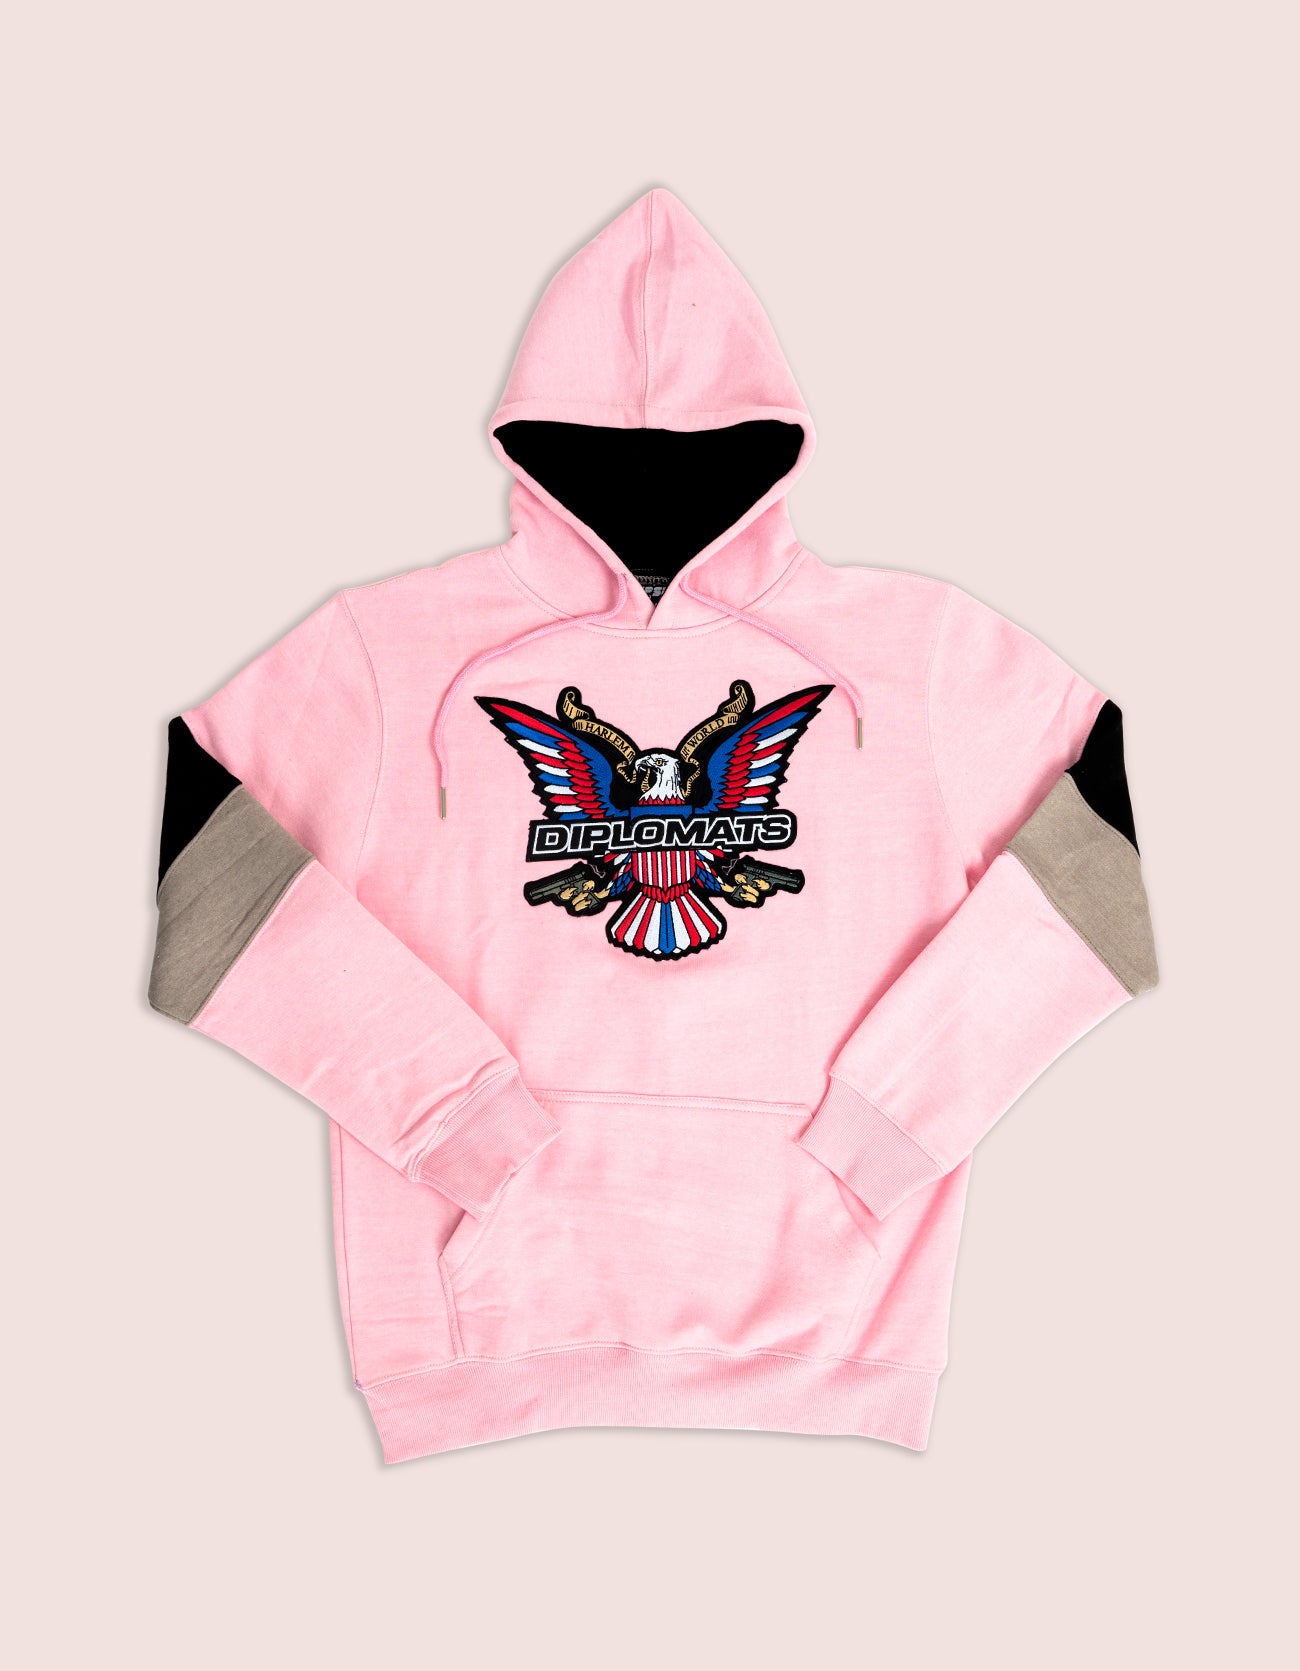 Dipset Couture Pink/Grey/Black Sweatsuit